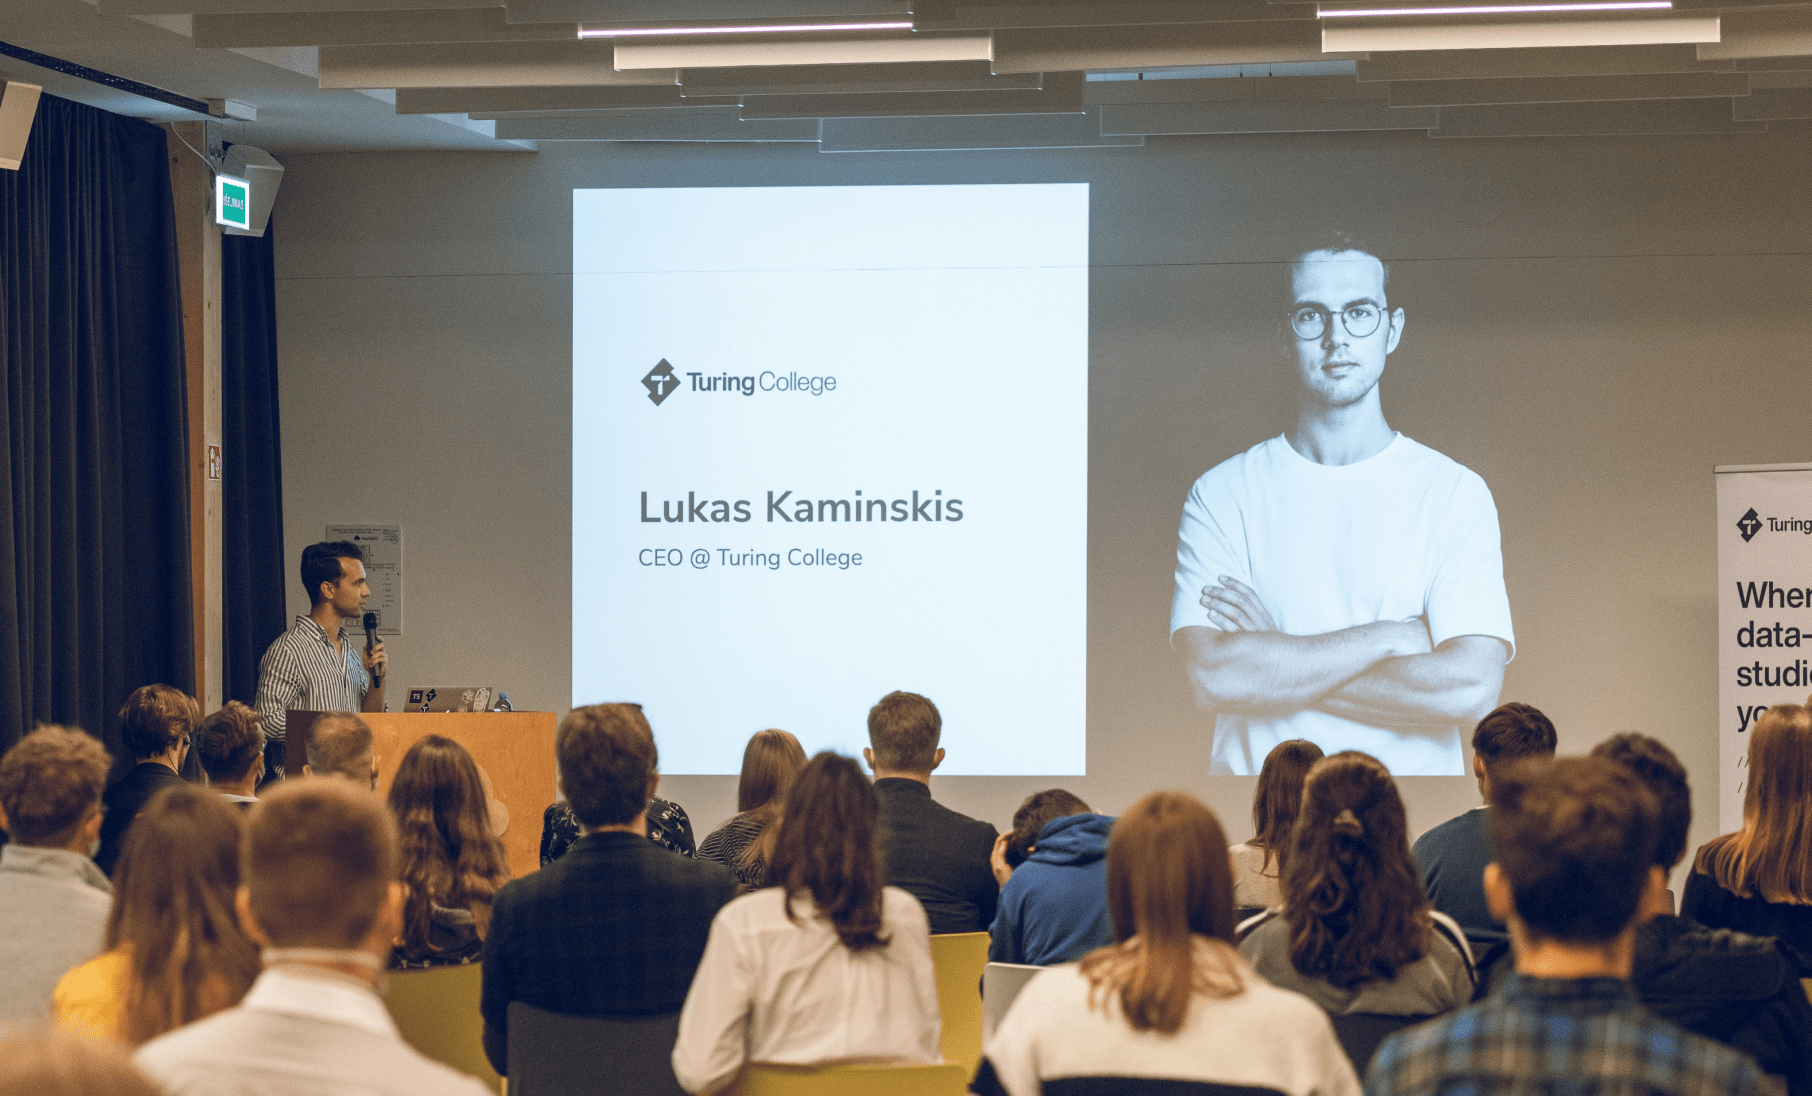 Lukas Kaminskis talking in front of an audience